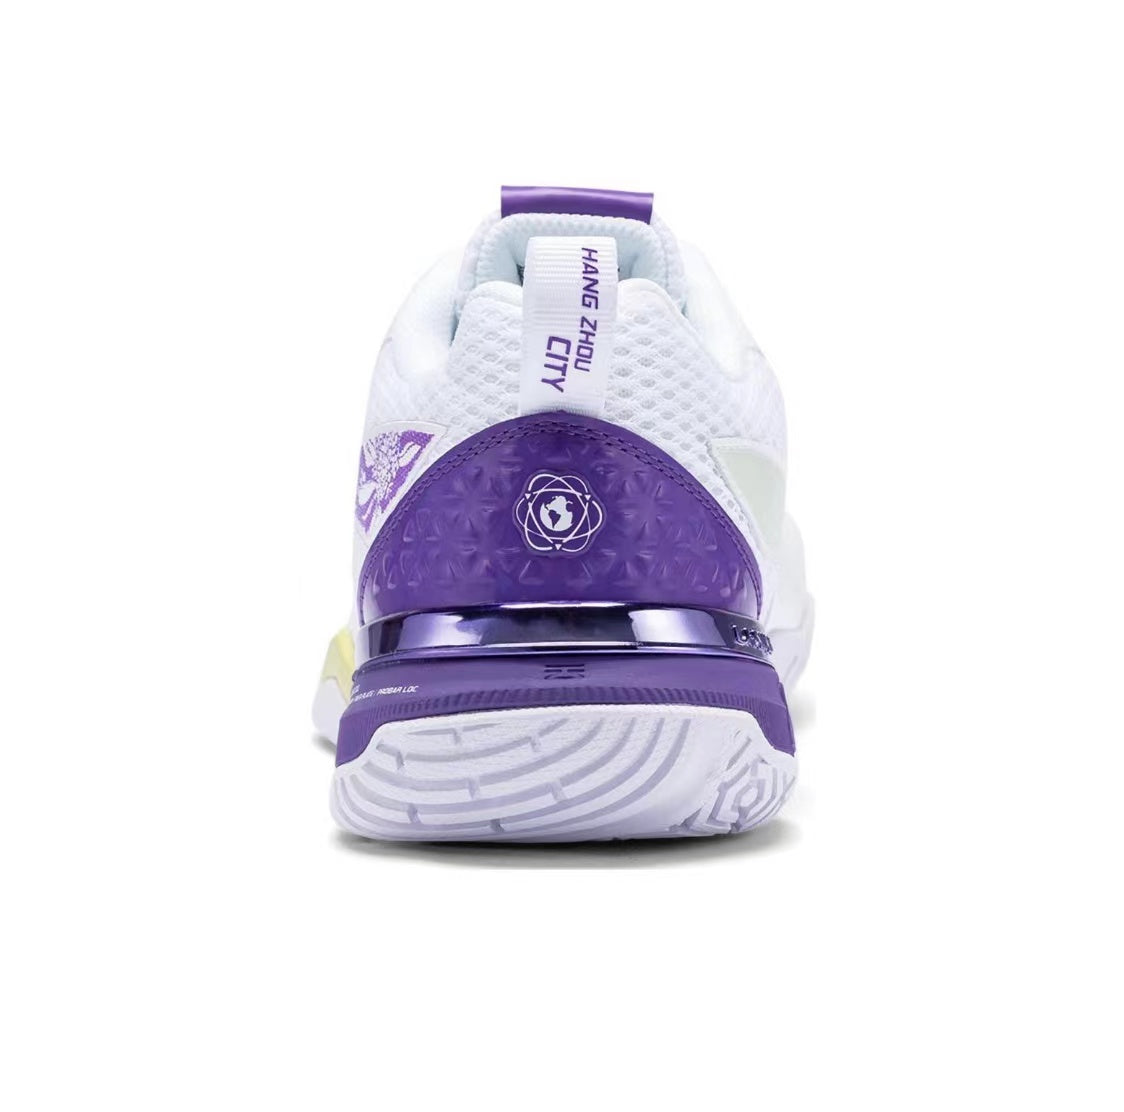 Blade DF-01 Pro | Li-Ning Badminton Shoes - White/Purple